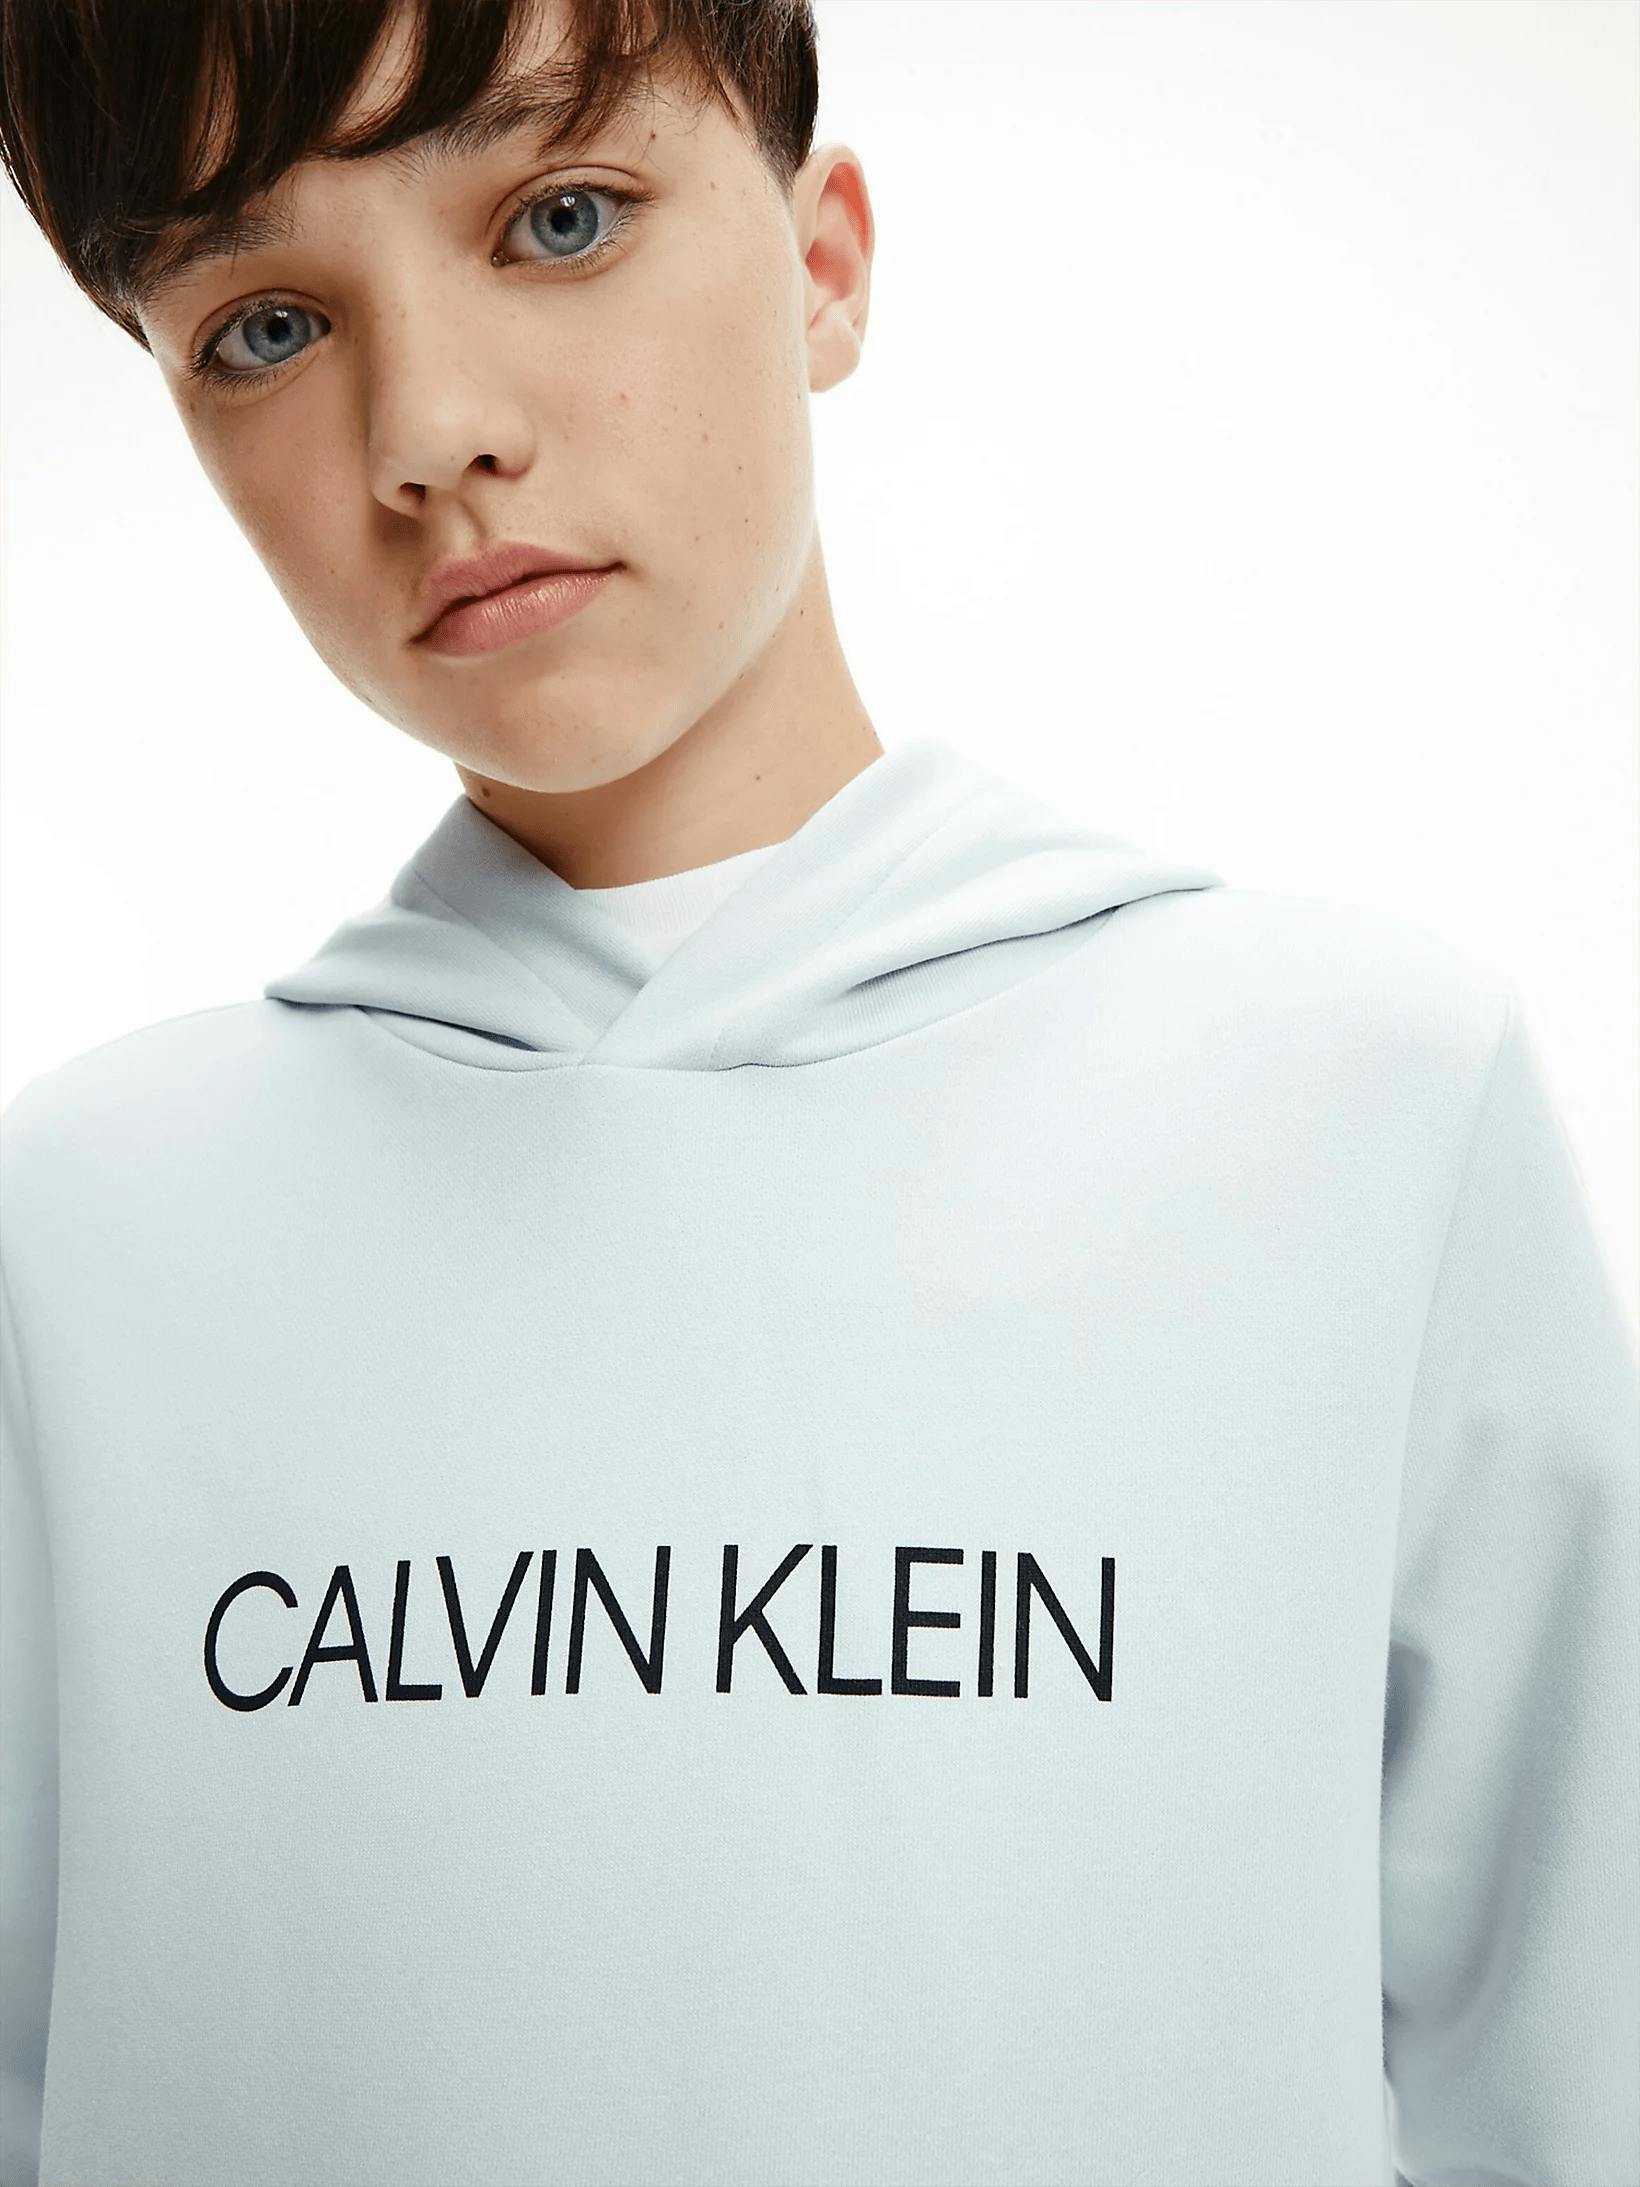 Kidz Management for Calvin Klein - Faas publication photo #1